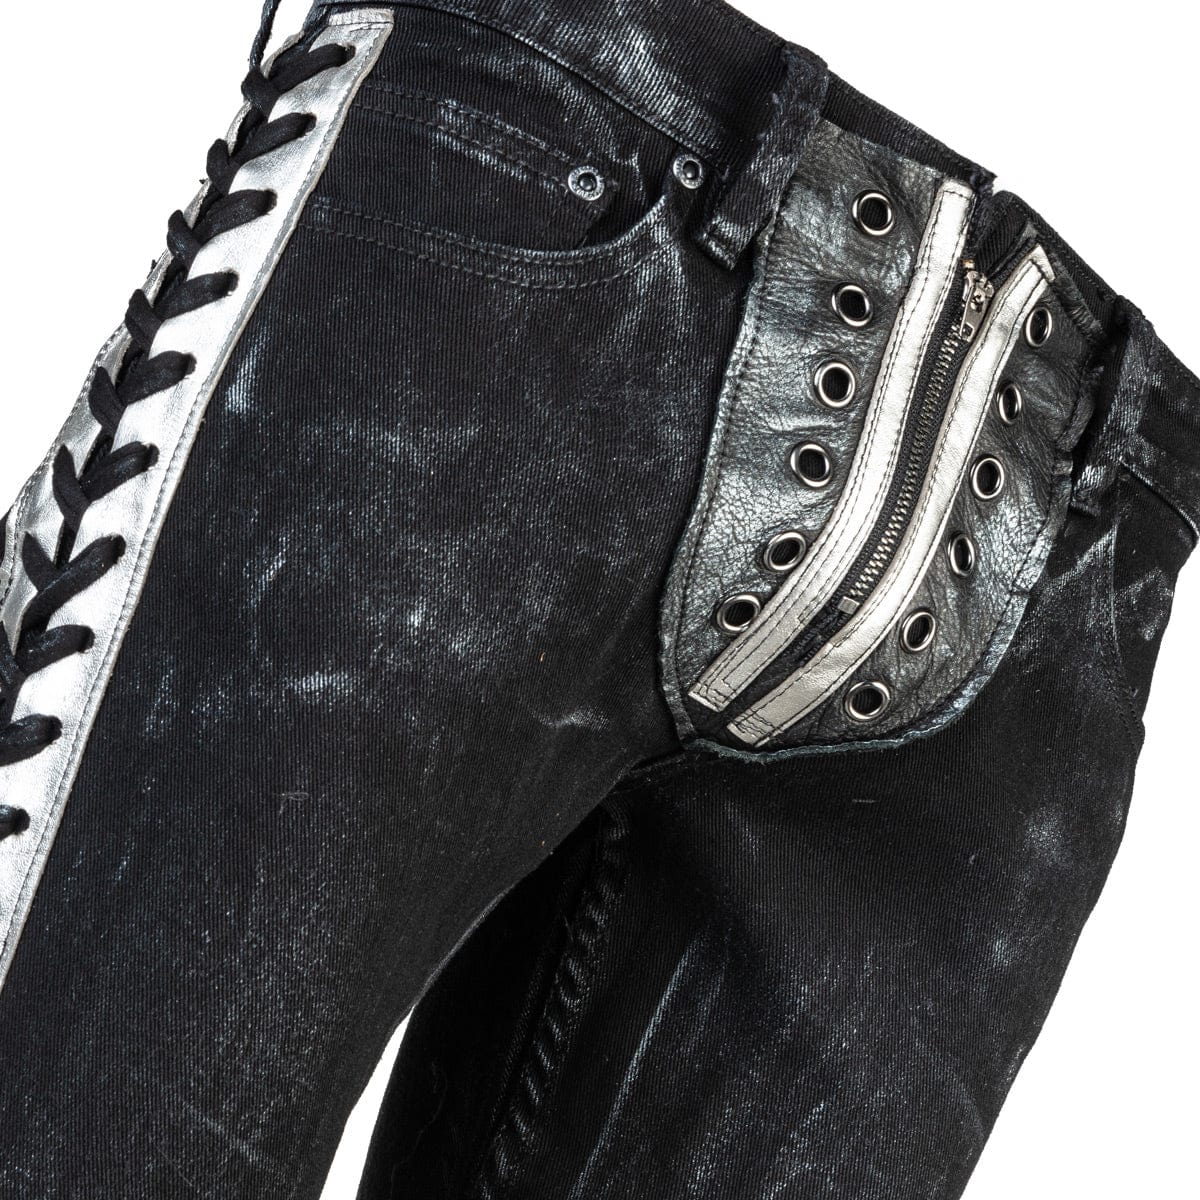 Wornstar Custom - Jeans - WSCP-380 - Silver Stripe